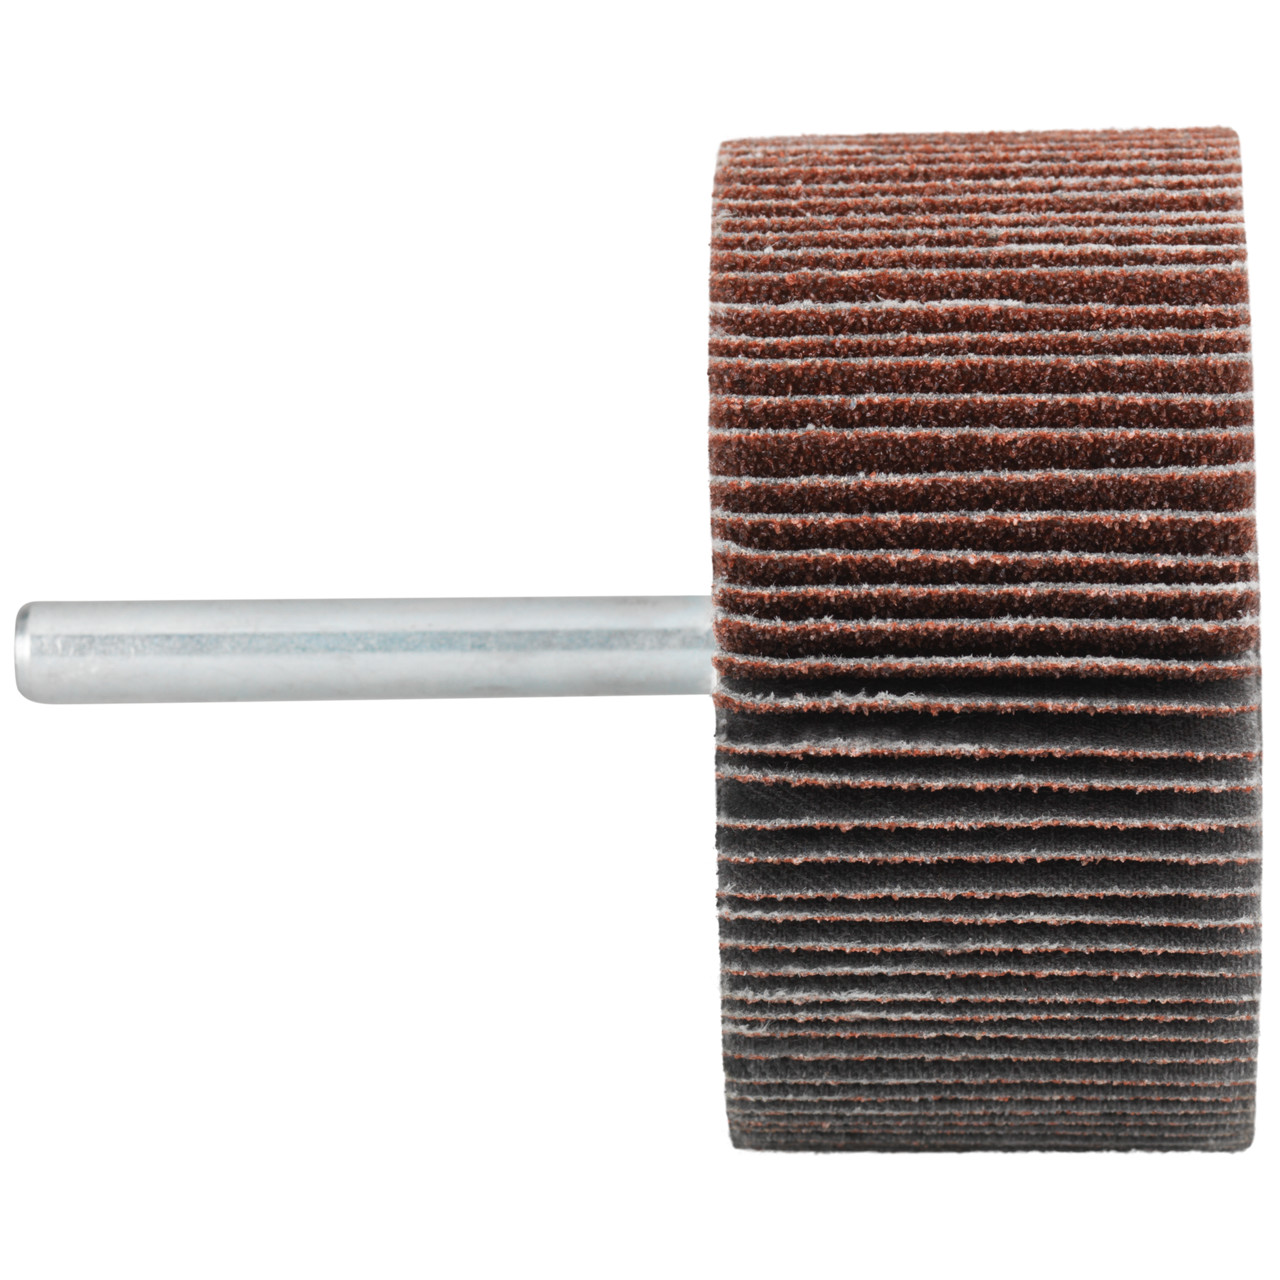 Tyrolit A-P01 C X Perni DxD 60x30 Per acciaio, acciaio inox e metalli non ferrosi, P320, forma: 52LA, Art. 816964